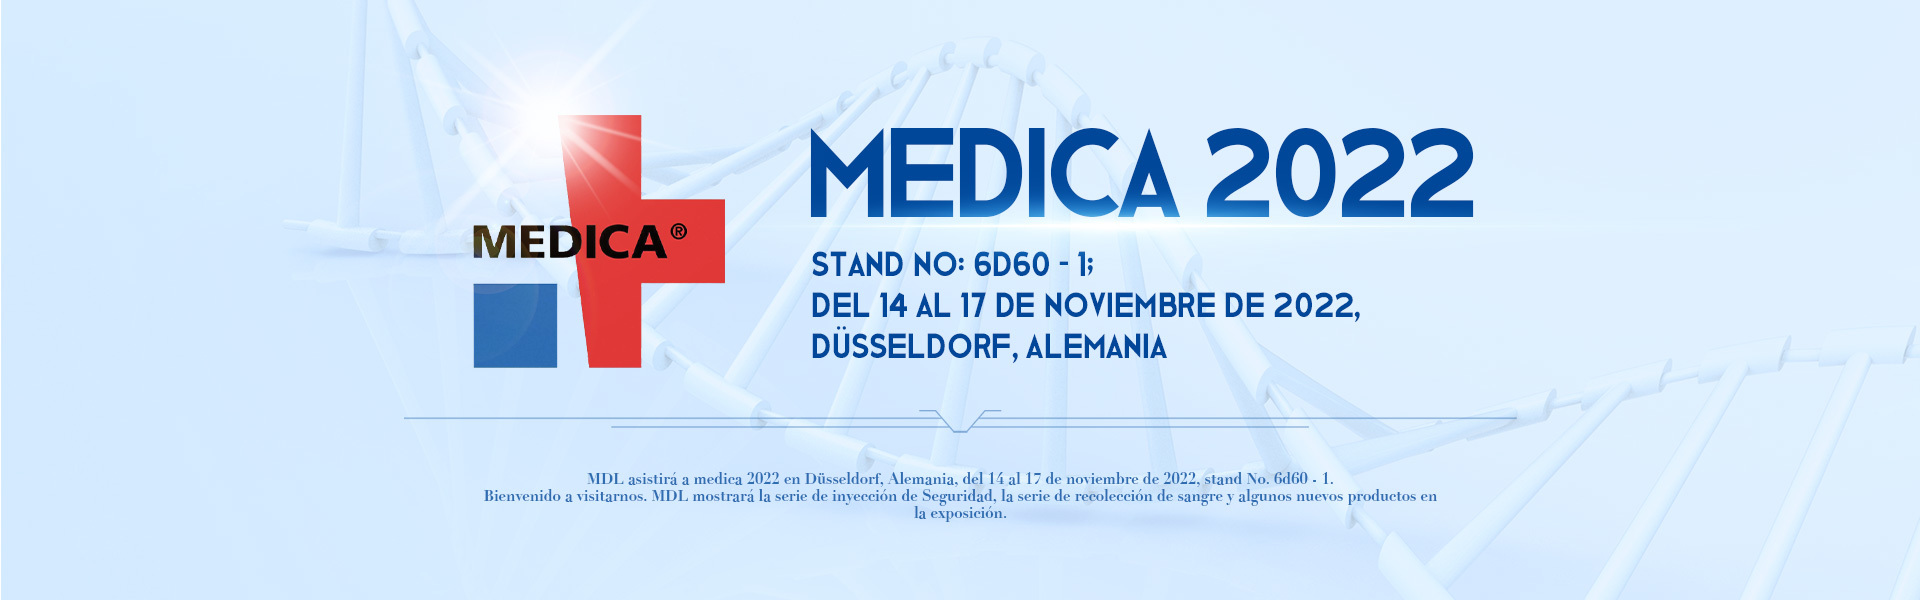 Medica 2022, stand No. 6d60 - 1; Dusseldorf, Alemania, 14 a 17 de noviembre de 2022